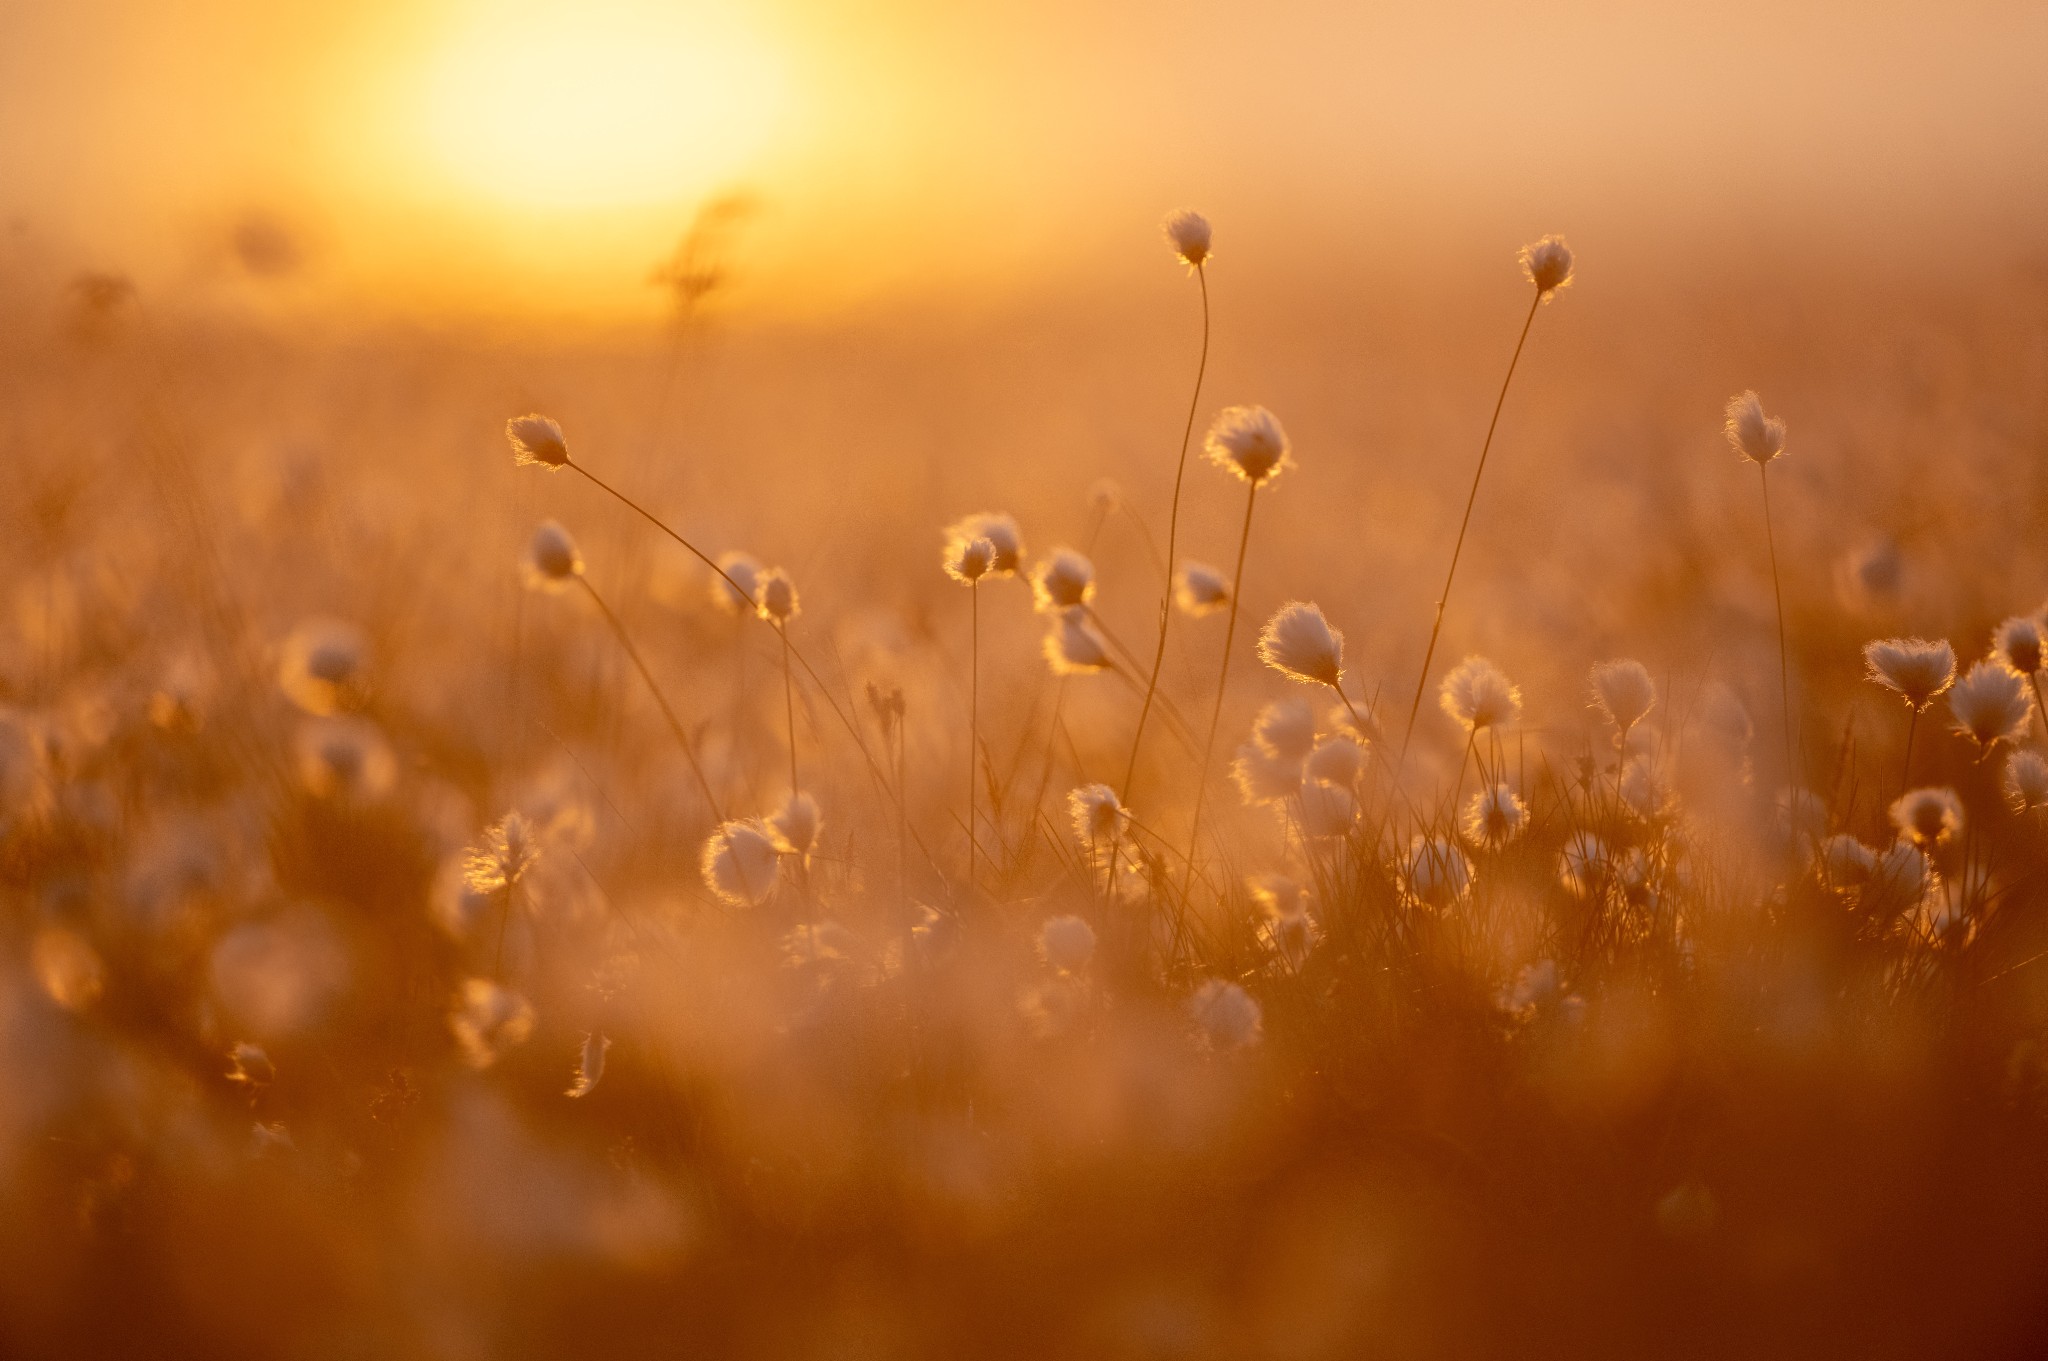 Orkney cotton grass - image by Raymond Besant